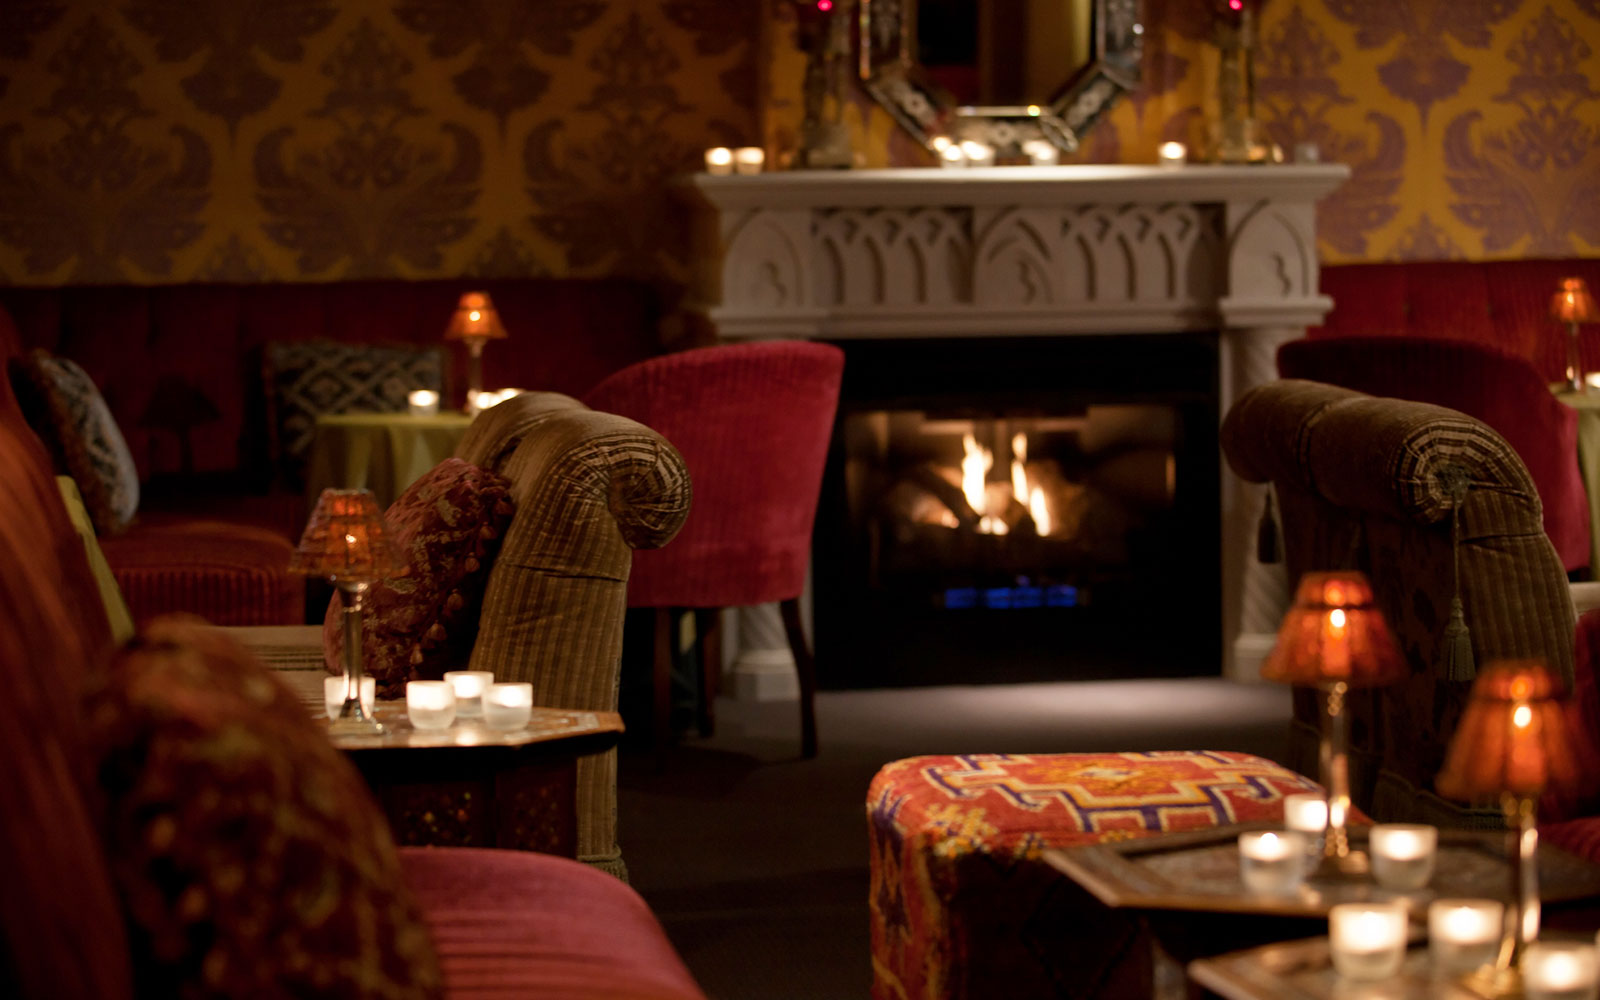 Hotel Lombardy, Washington D.C. Venetian Room Lounge